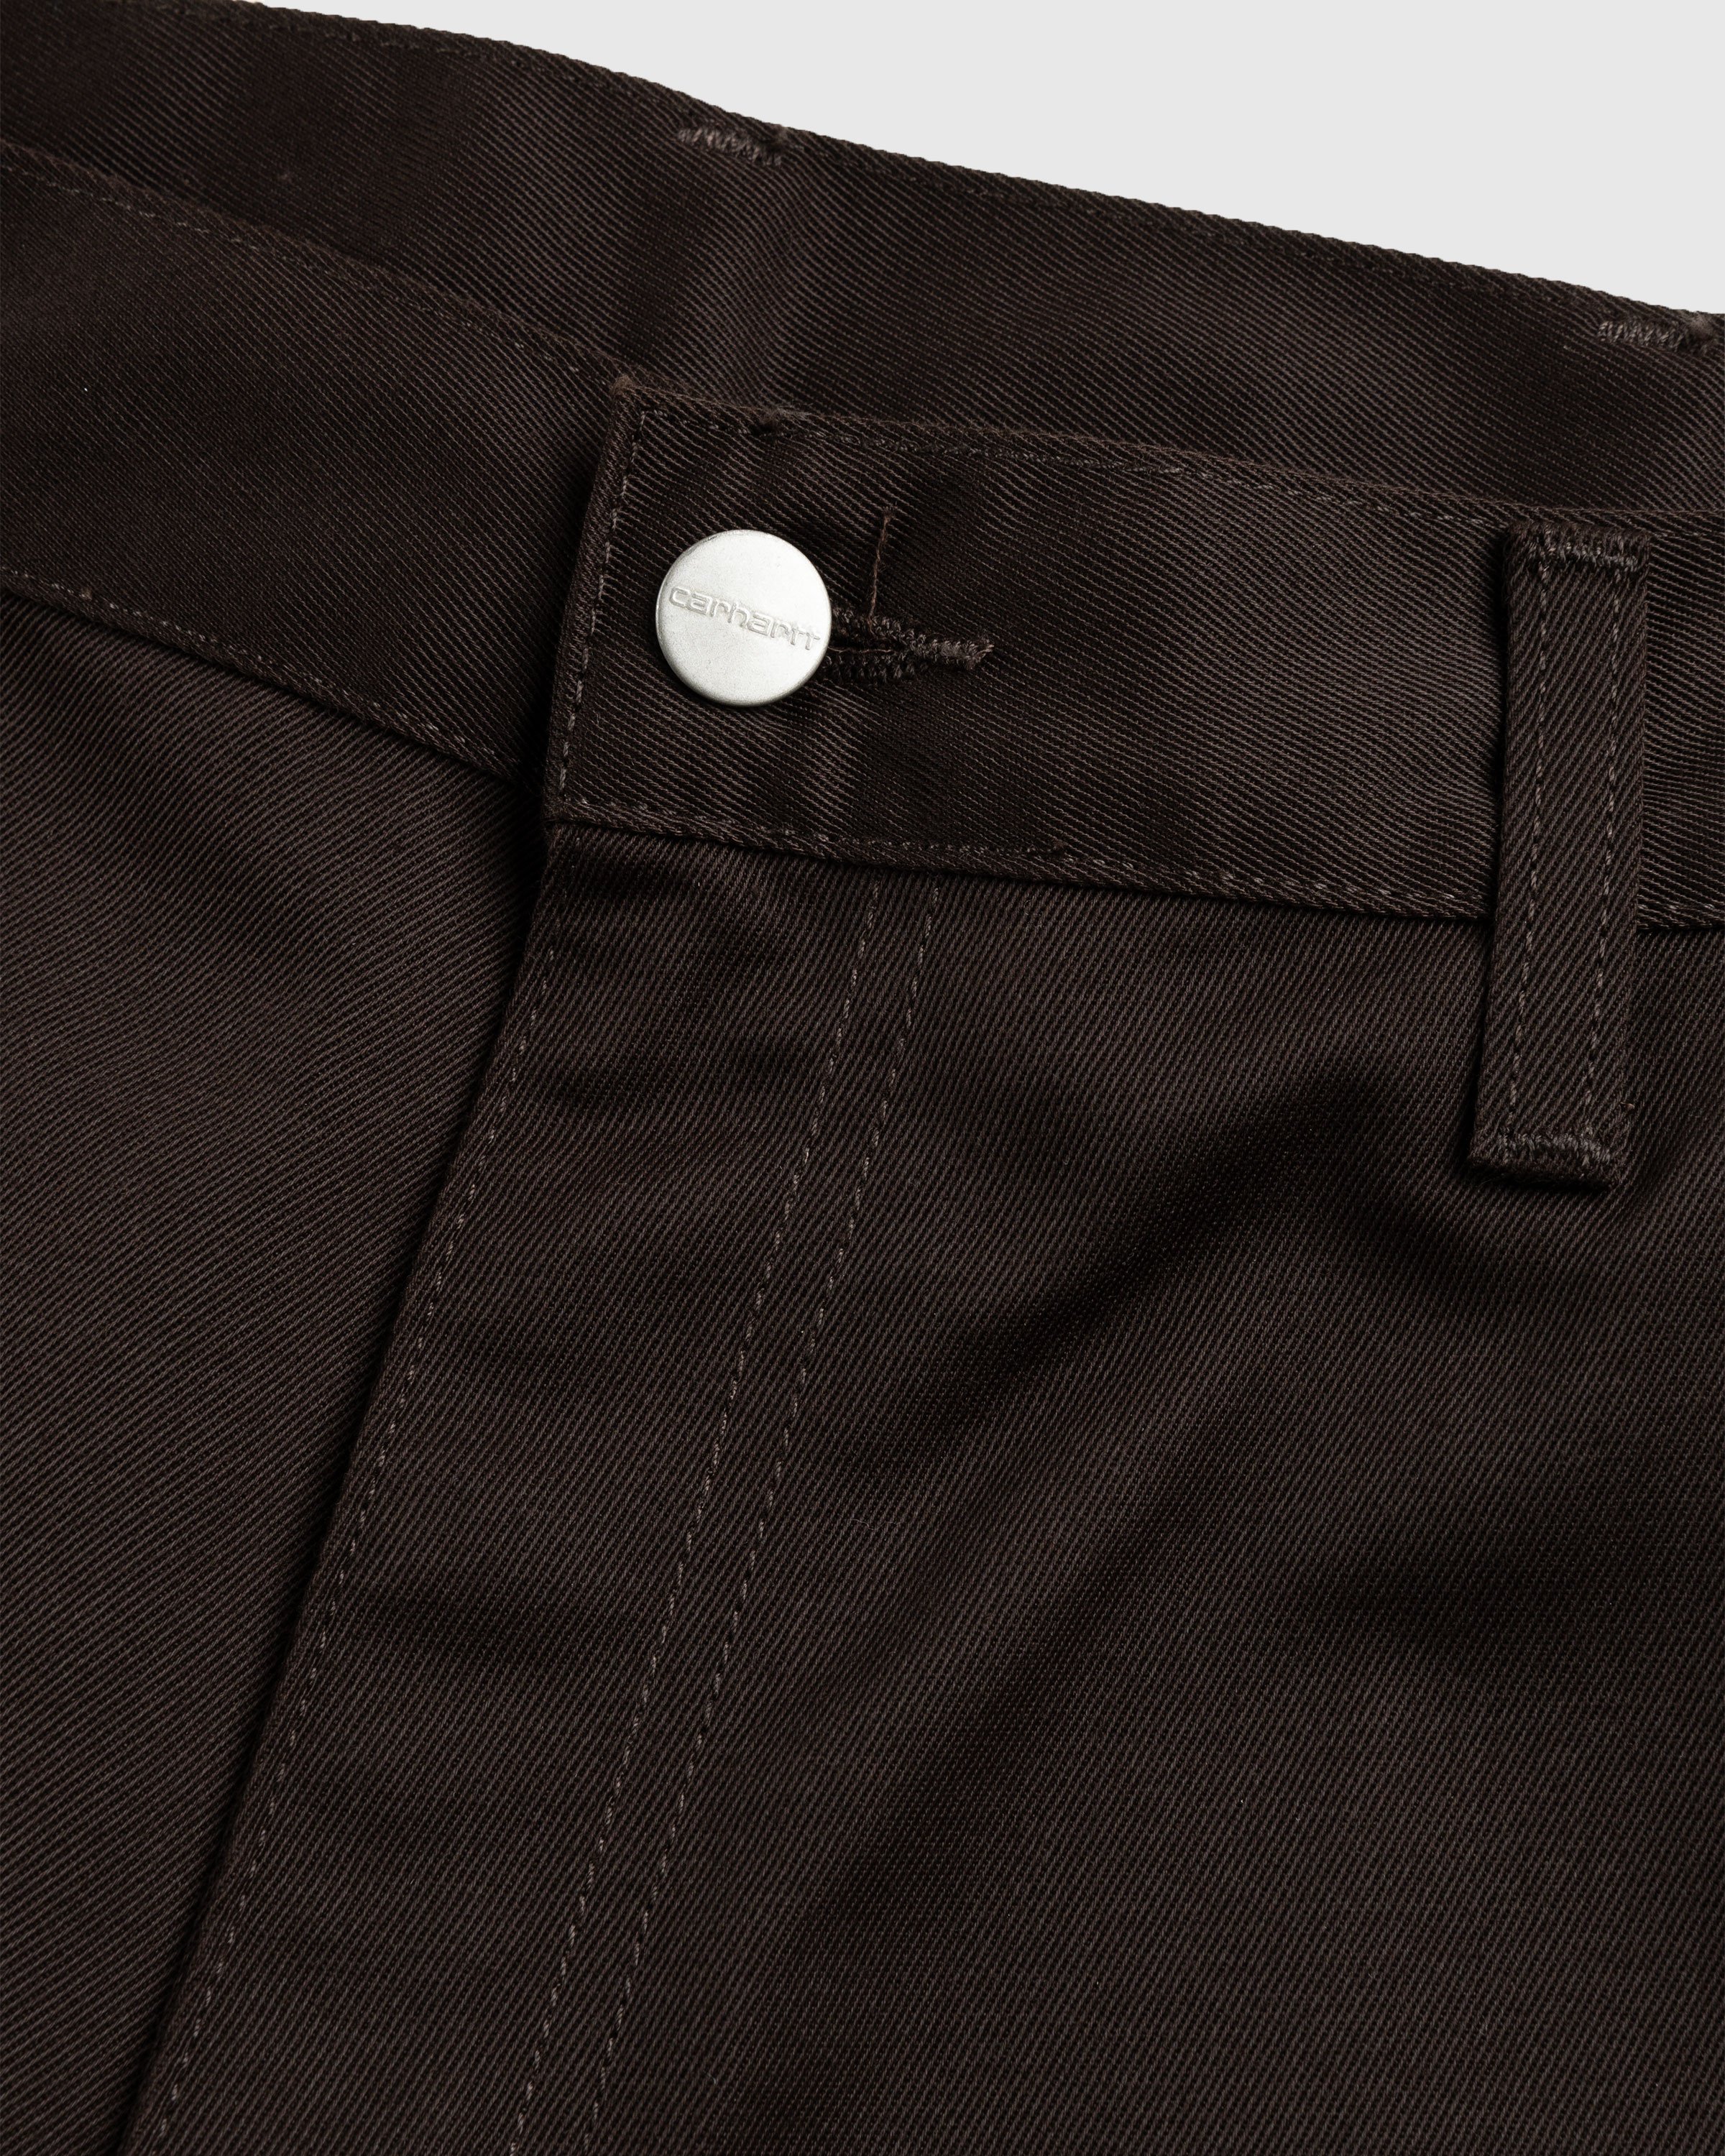 Carhartt WIP - Double Knee Pant Tobacco/Rinsed - Clothing - Brown - Image 5